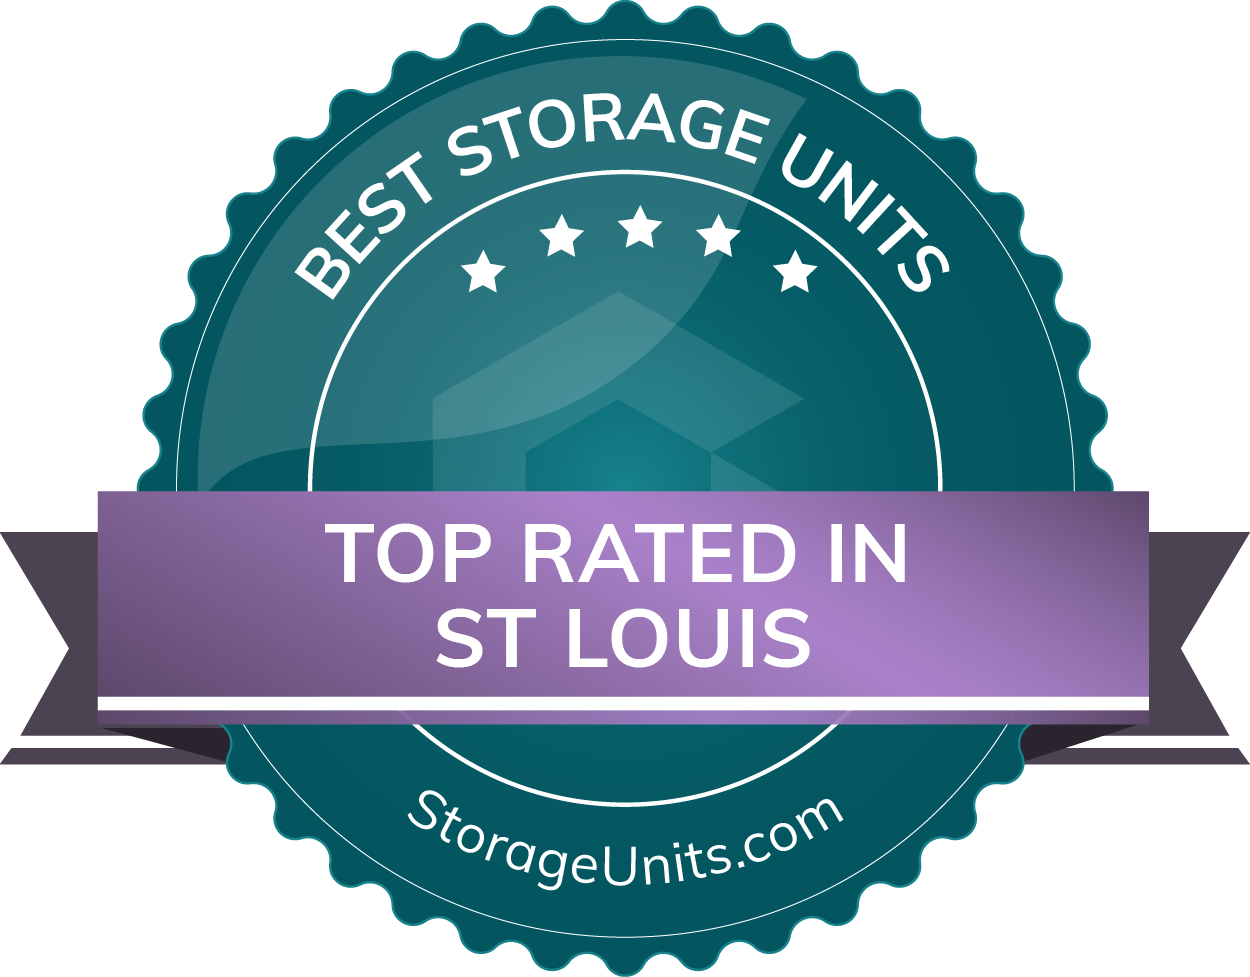 Best Self Storage Units in St. Louis, Missouri of 2022